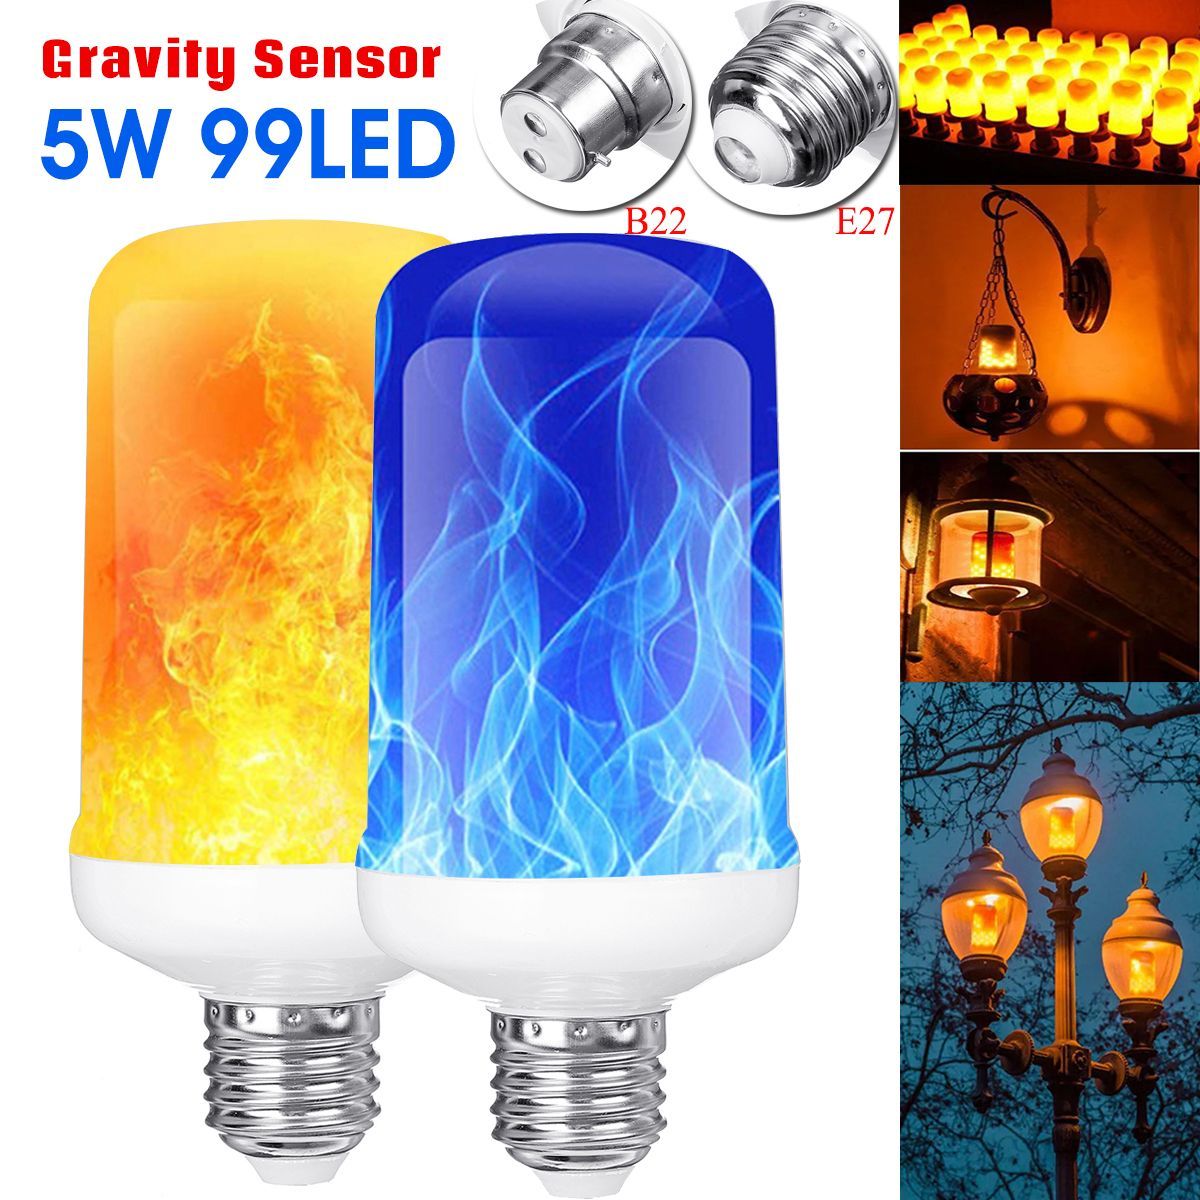 4-Modes-Gravity-Sensor-B22-E27-Flame-Effect-Fire-Light-Bulb-Super-Bright-96-LEDs-Decorative-Atmosphe-1693493